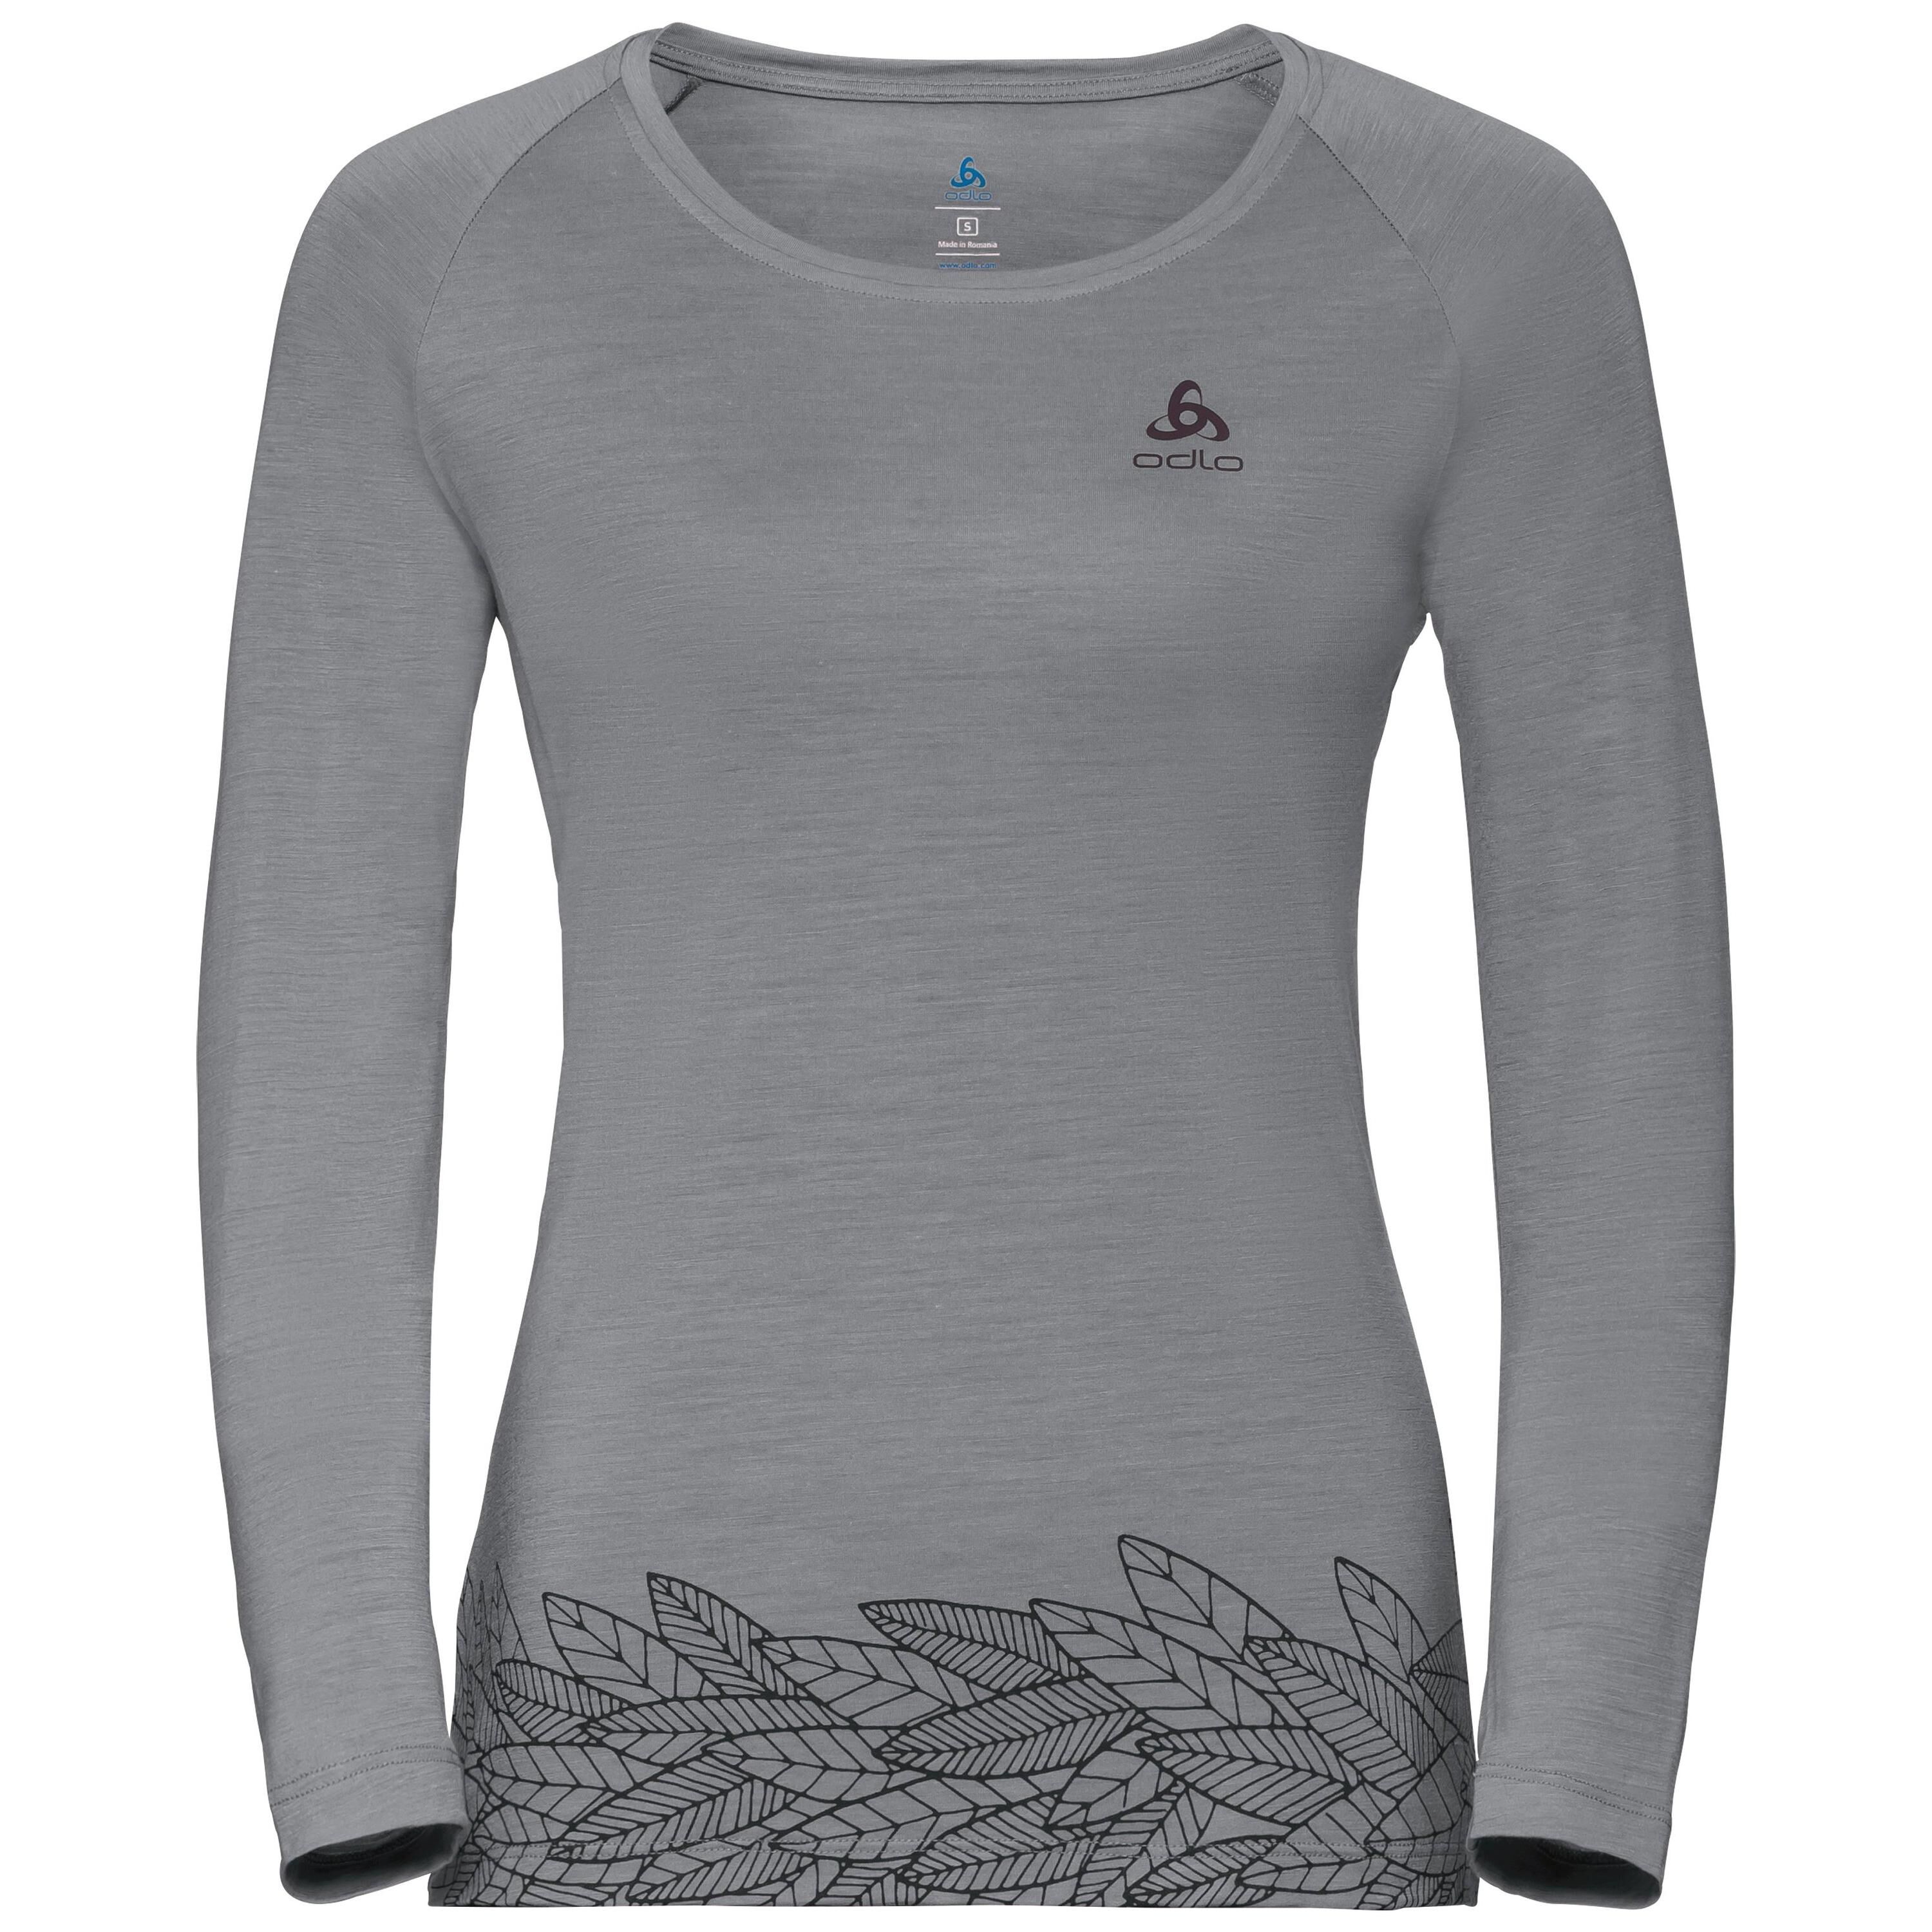 Odlo Damen CONCORD Langarm-Shirt, female, grey melange - leaves on waist print SS19, L